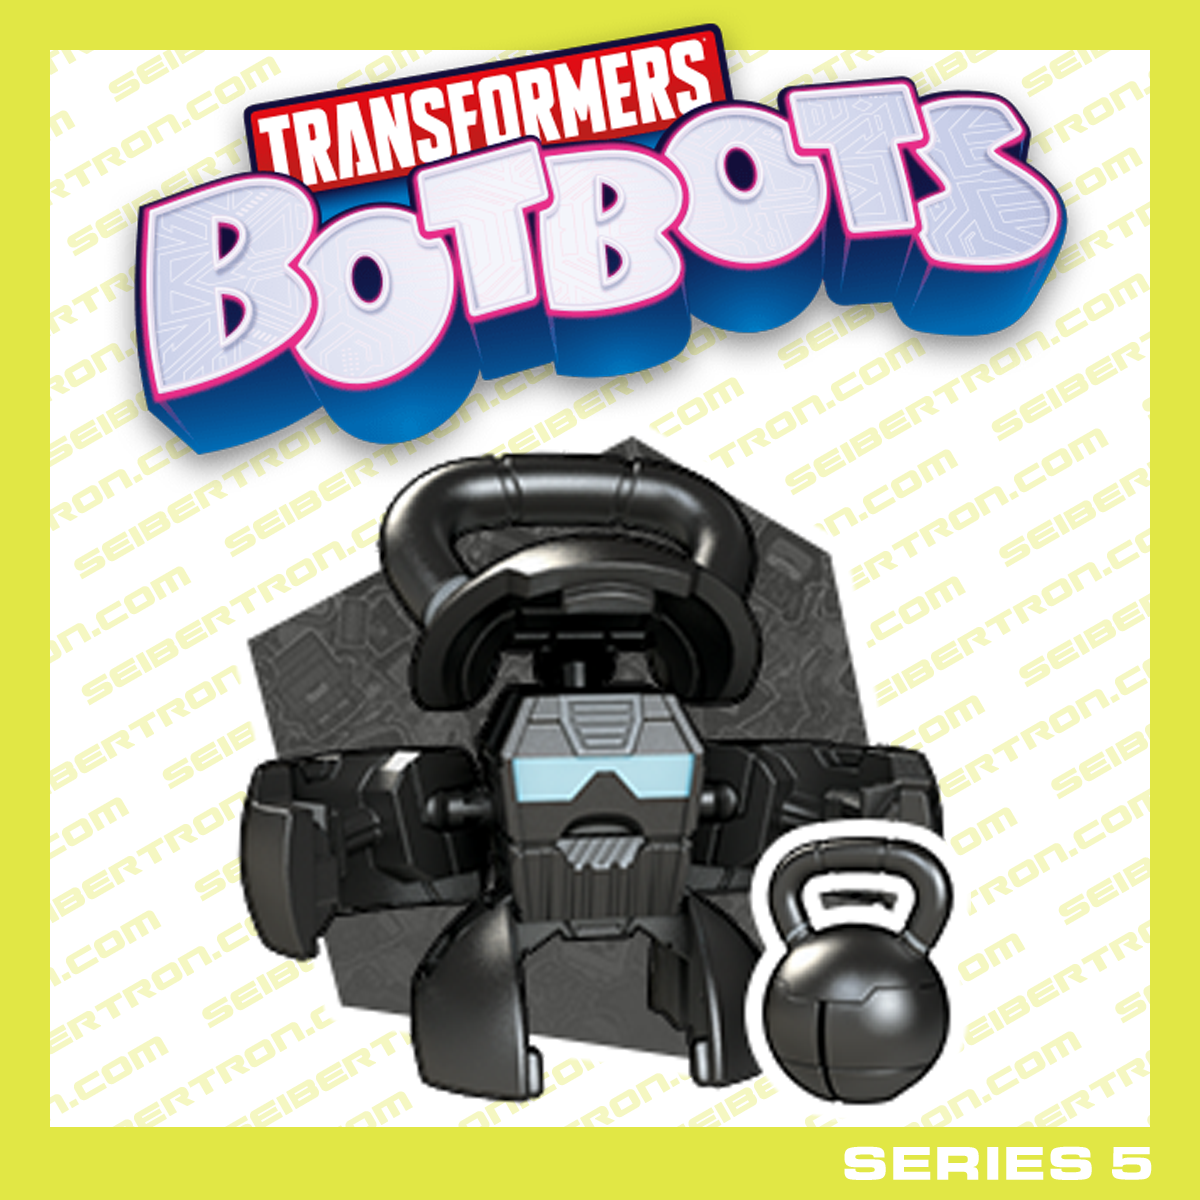 BOT-T-BUILDER Transformers BotBots Series 5 Cardio Clique kettlebell weight 2020